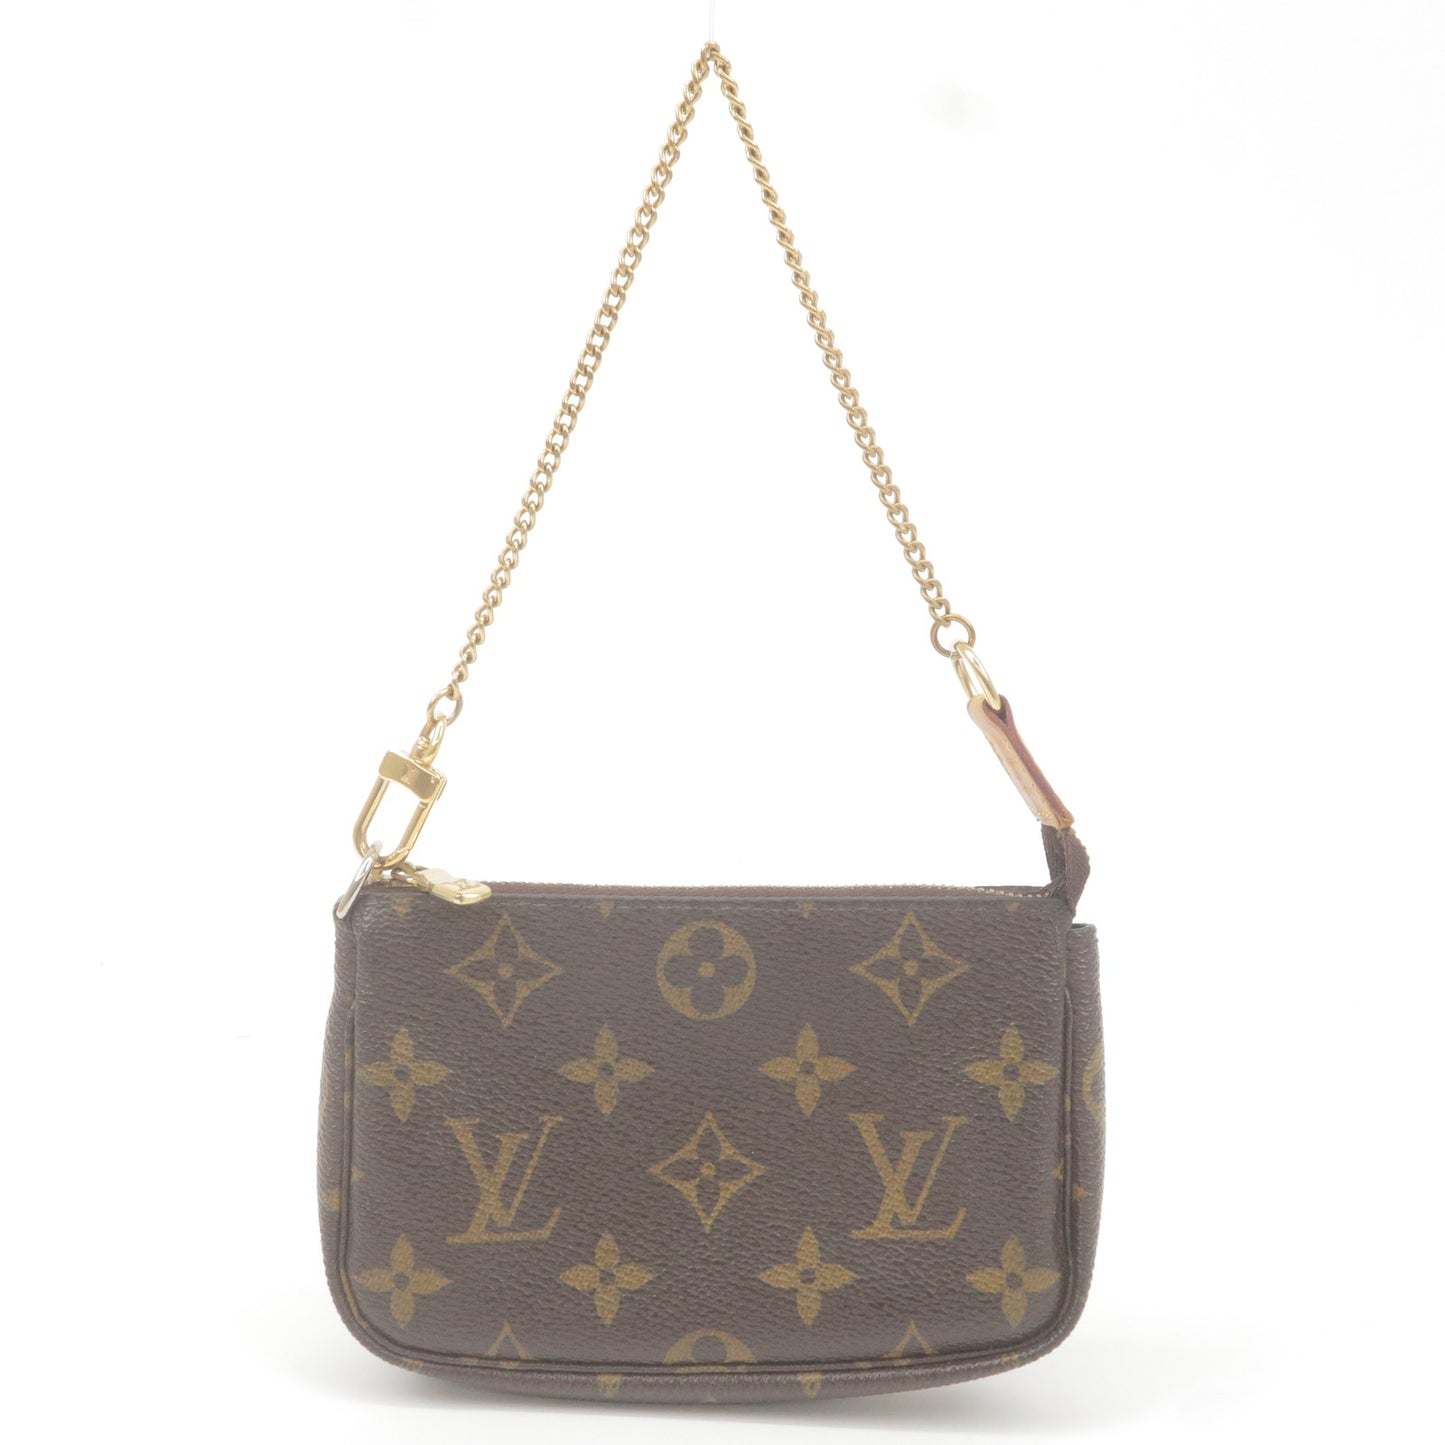 Brand New Louis Vuitton Mini Pochette Japan Edition